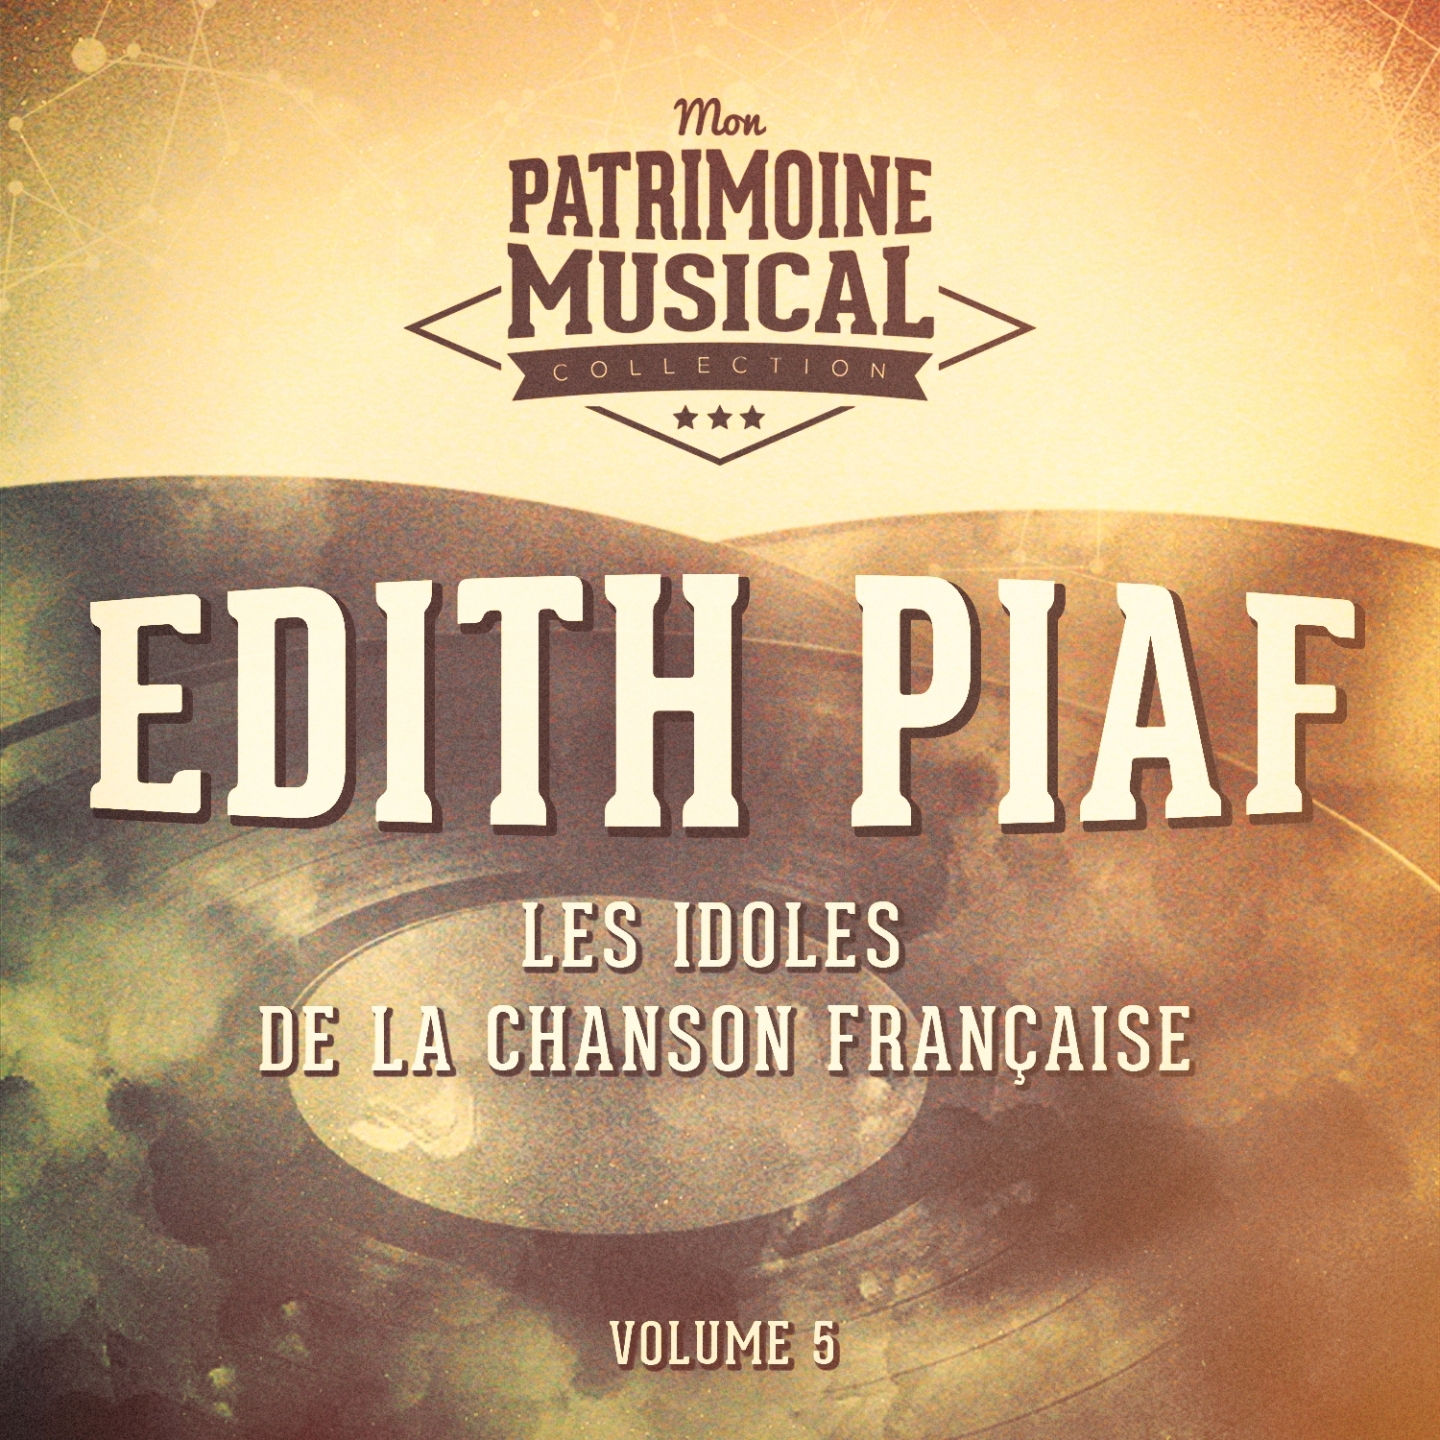 Les idoles de la chanson française : edith piaf, vol. 5